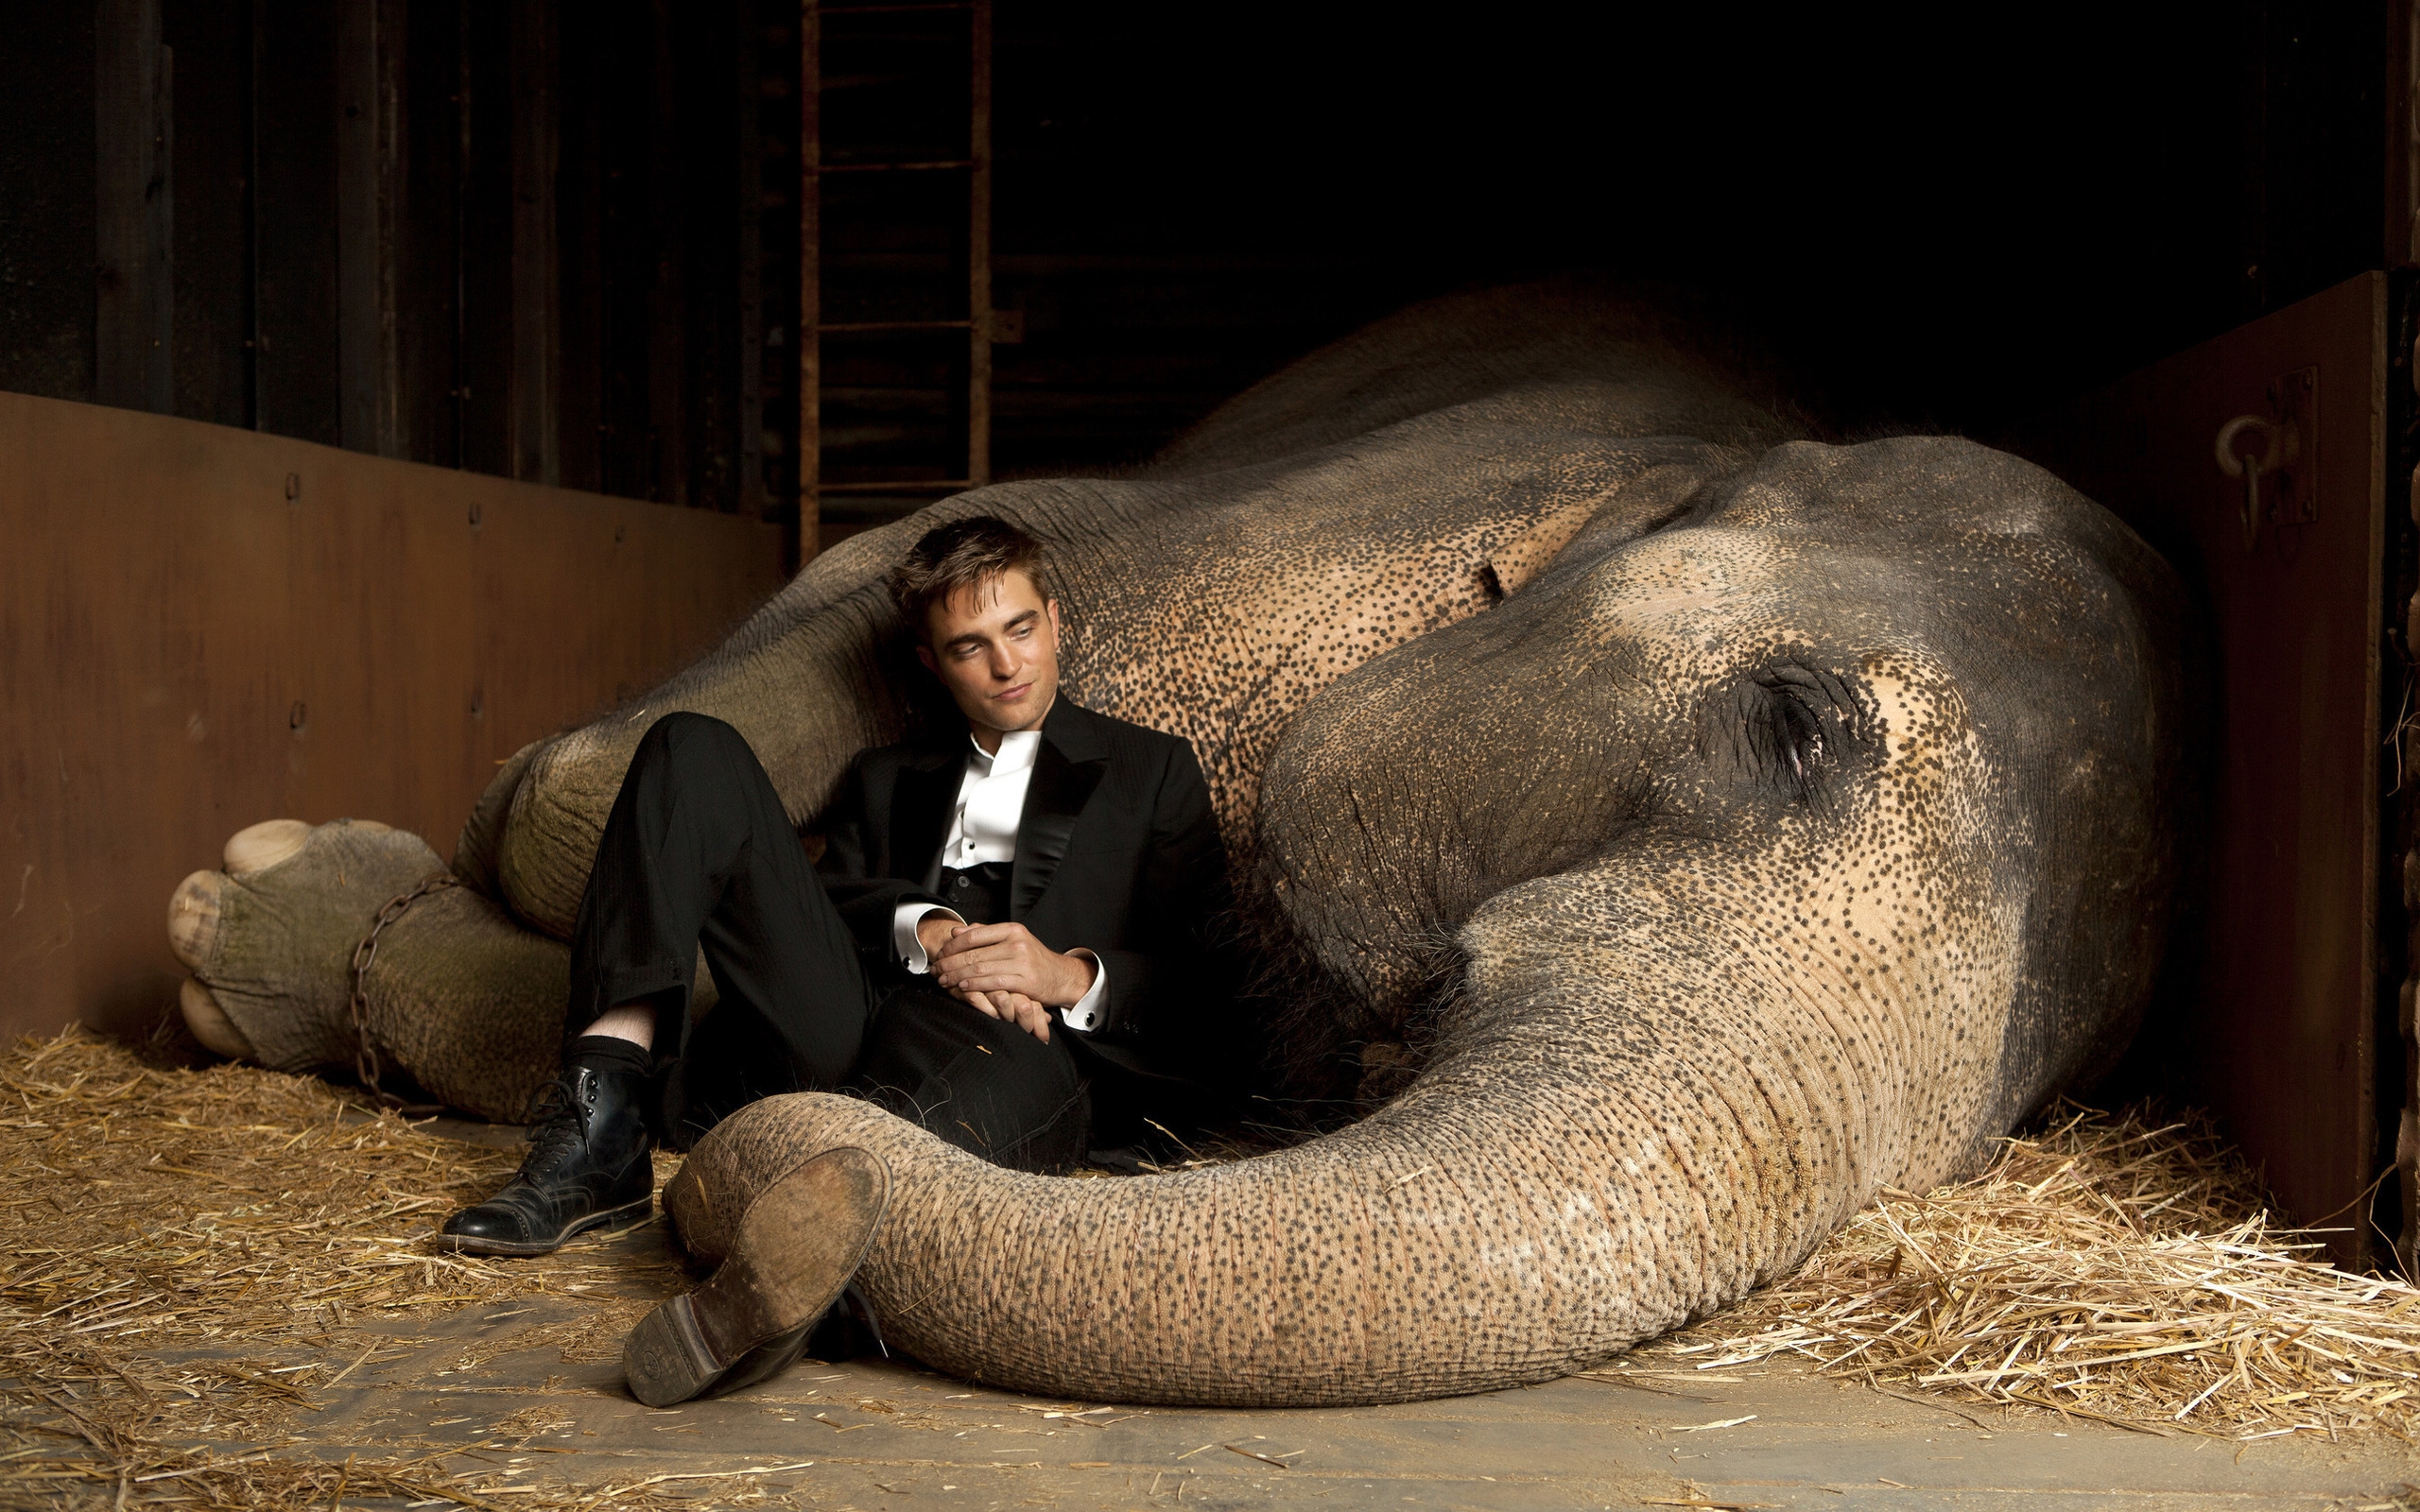 Robert Pattinson Close to Elephant for 2560 x 1600 widescreen resolution